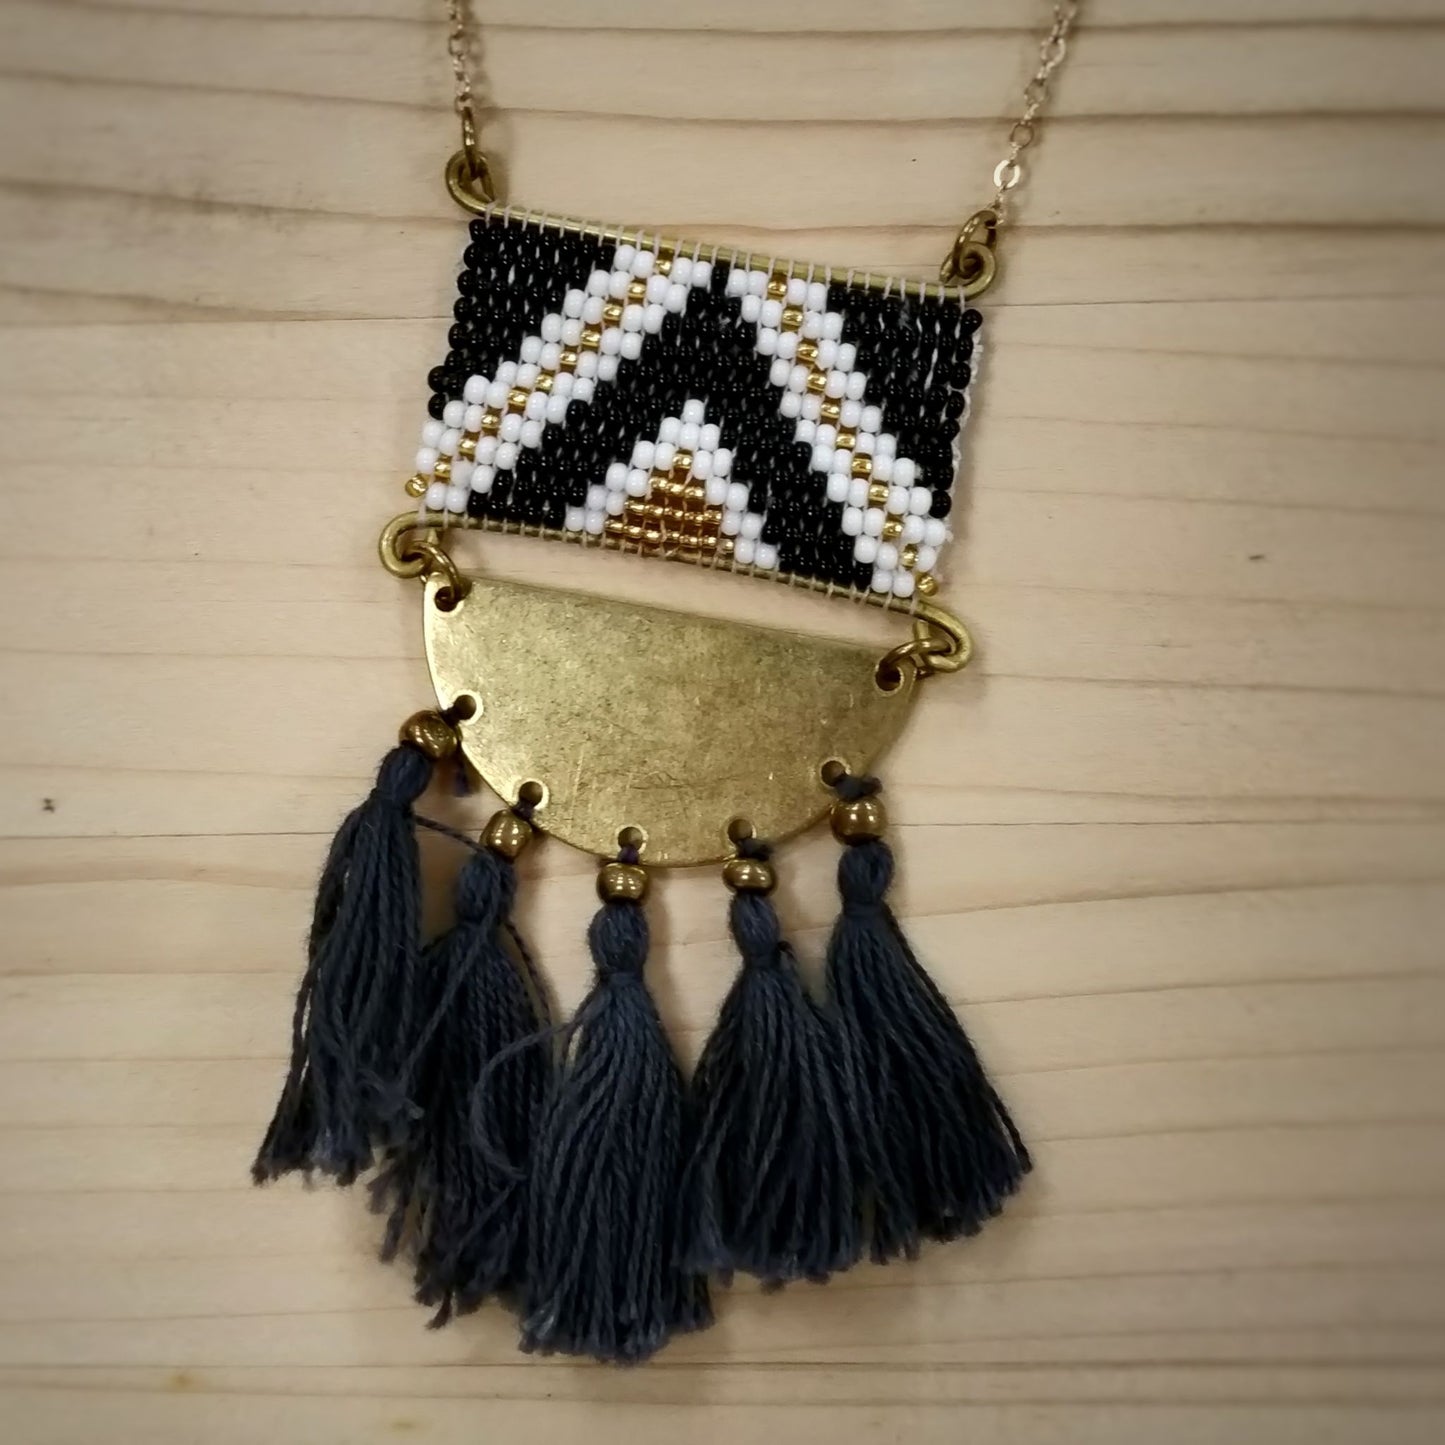 Izazi Black and Gold Beaded Necklace with Fringe - Handmade and Fair Trade - decoration